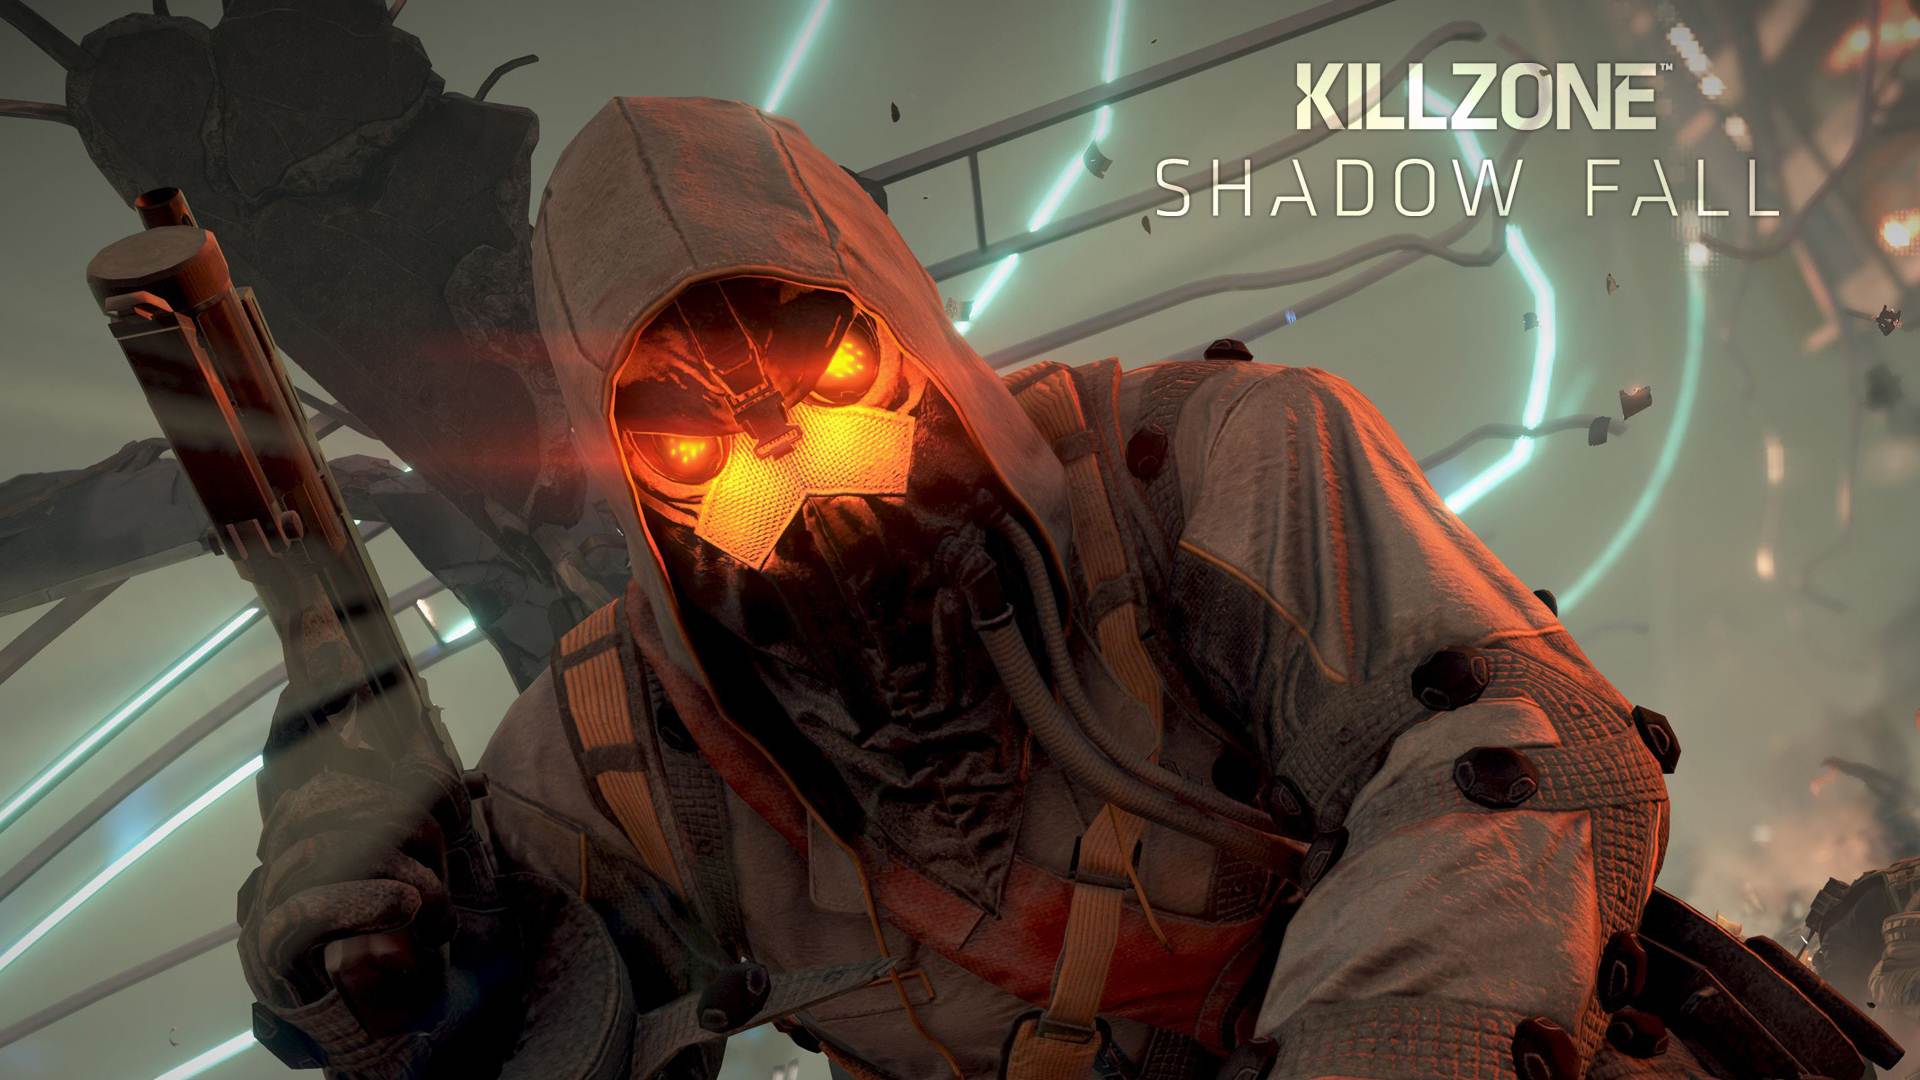 General 1920x1080 Killzone Killzone: Shadow Fall gun video games digital art weapon science fiction glowing eyes video game art